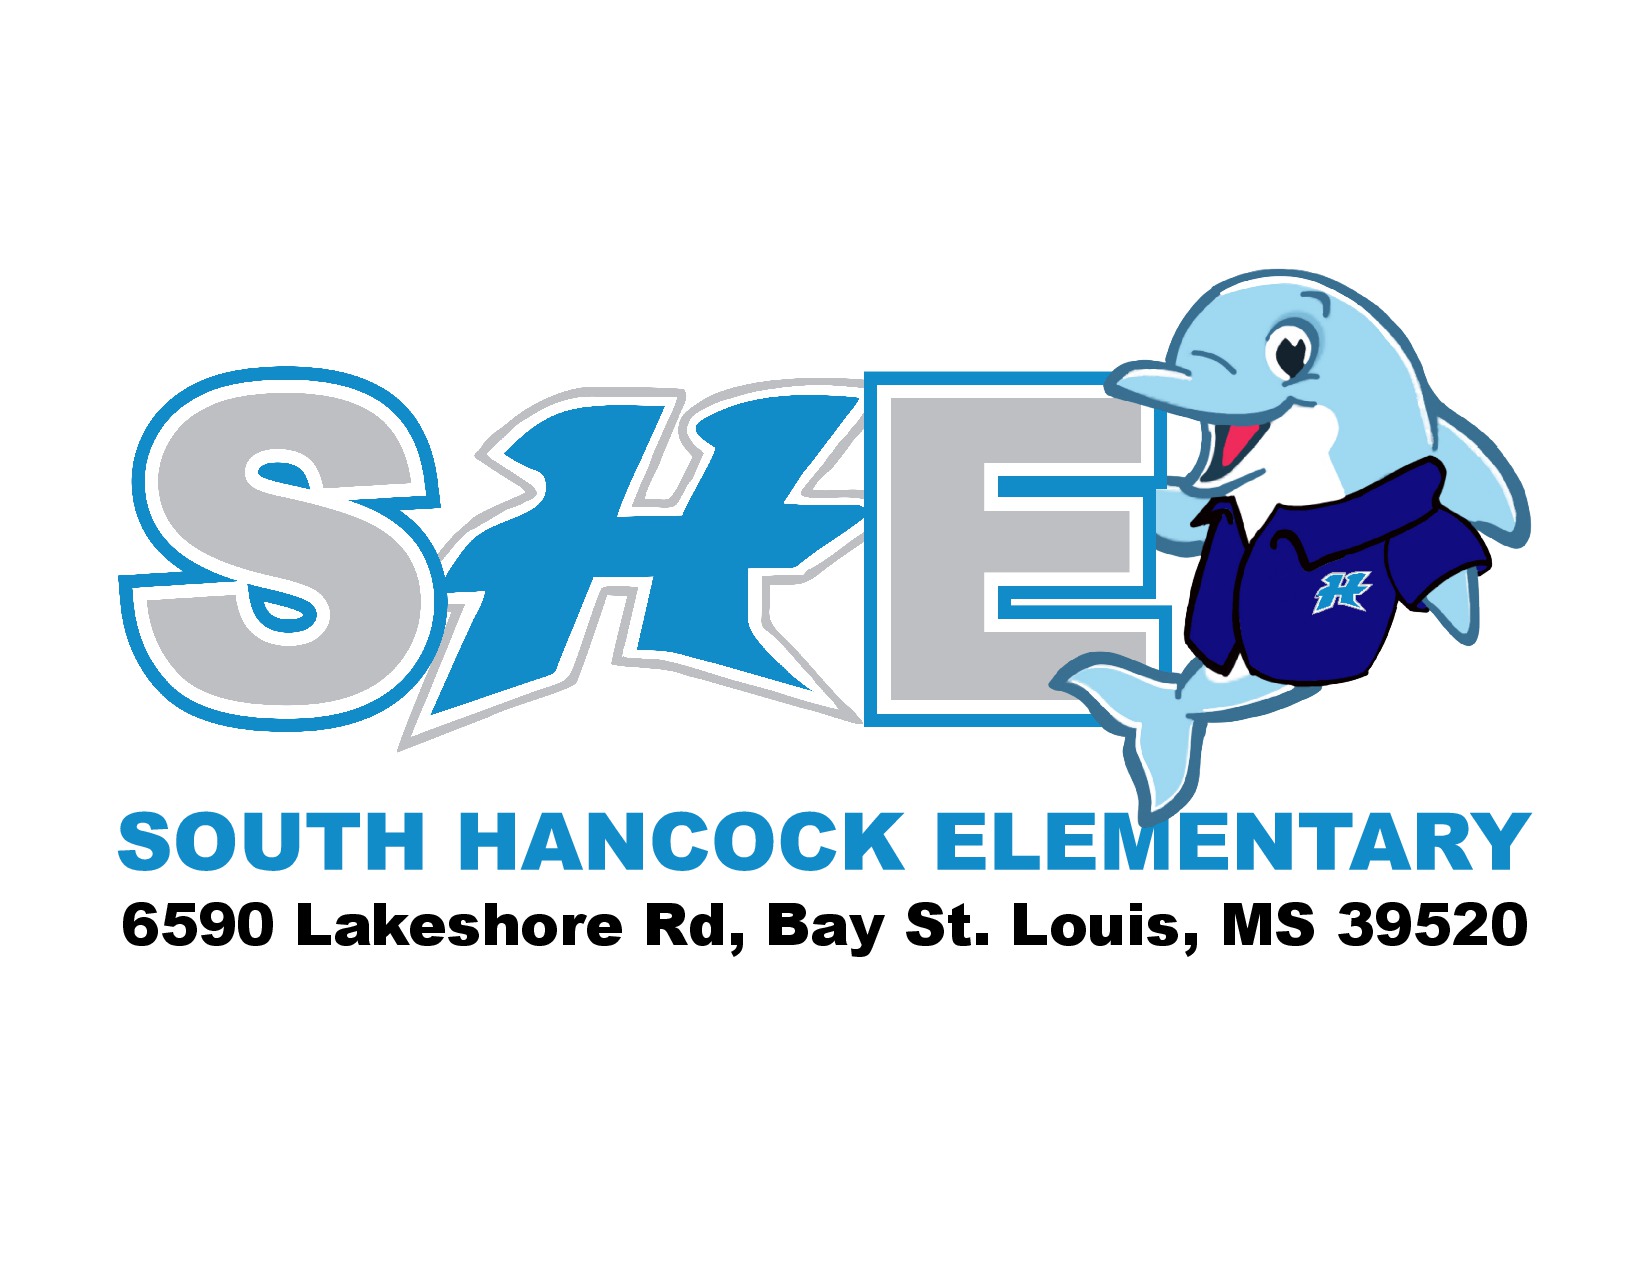 South Hancock Elementary